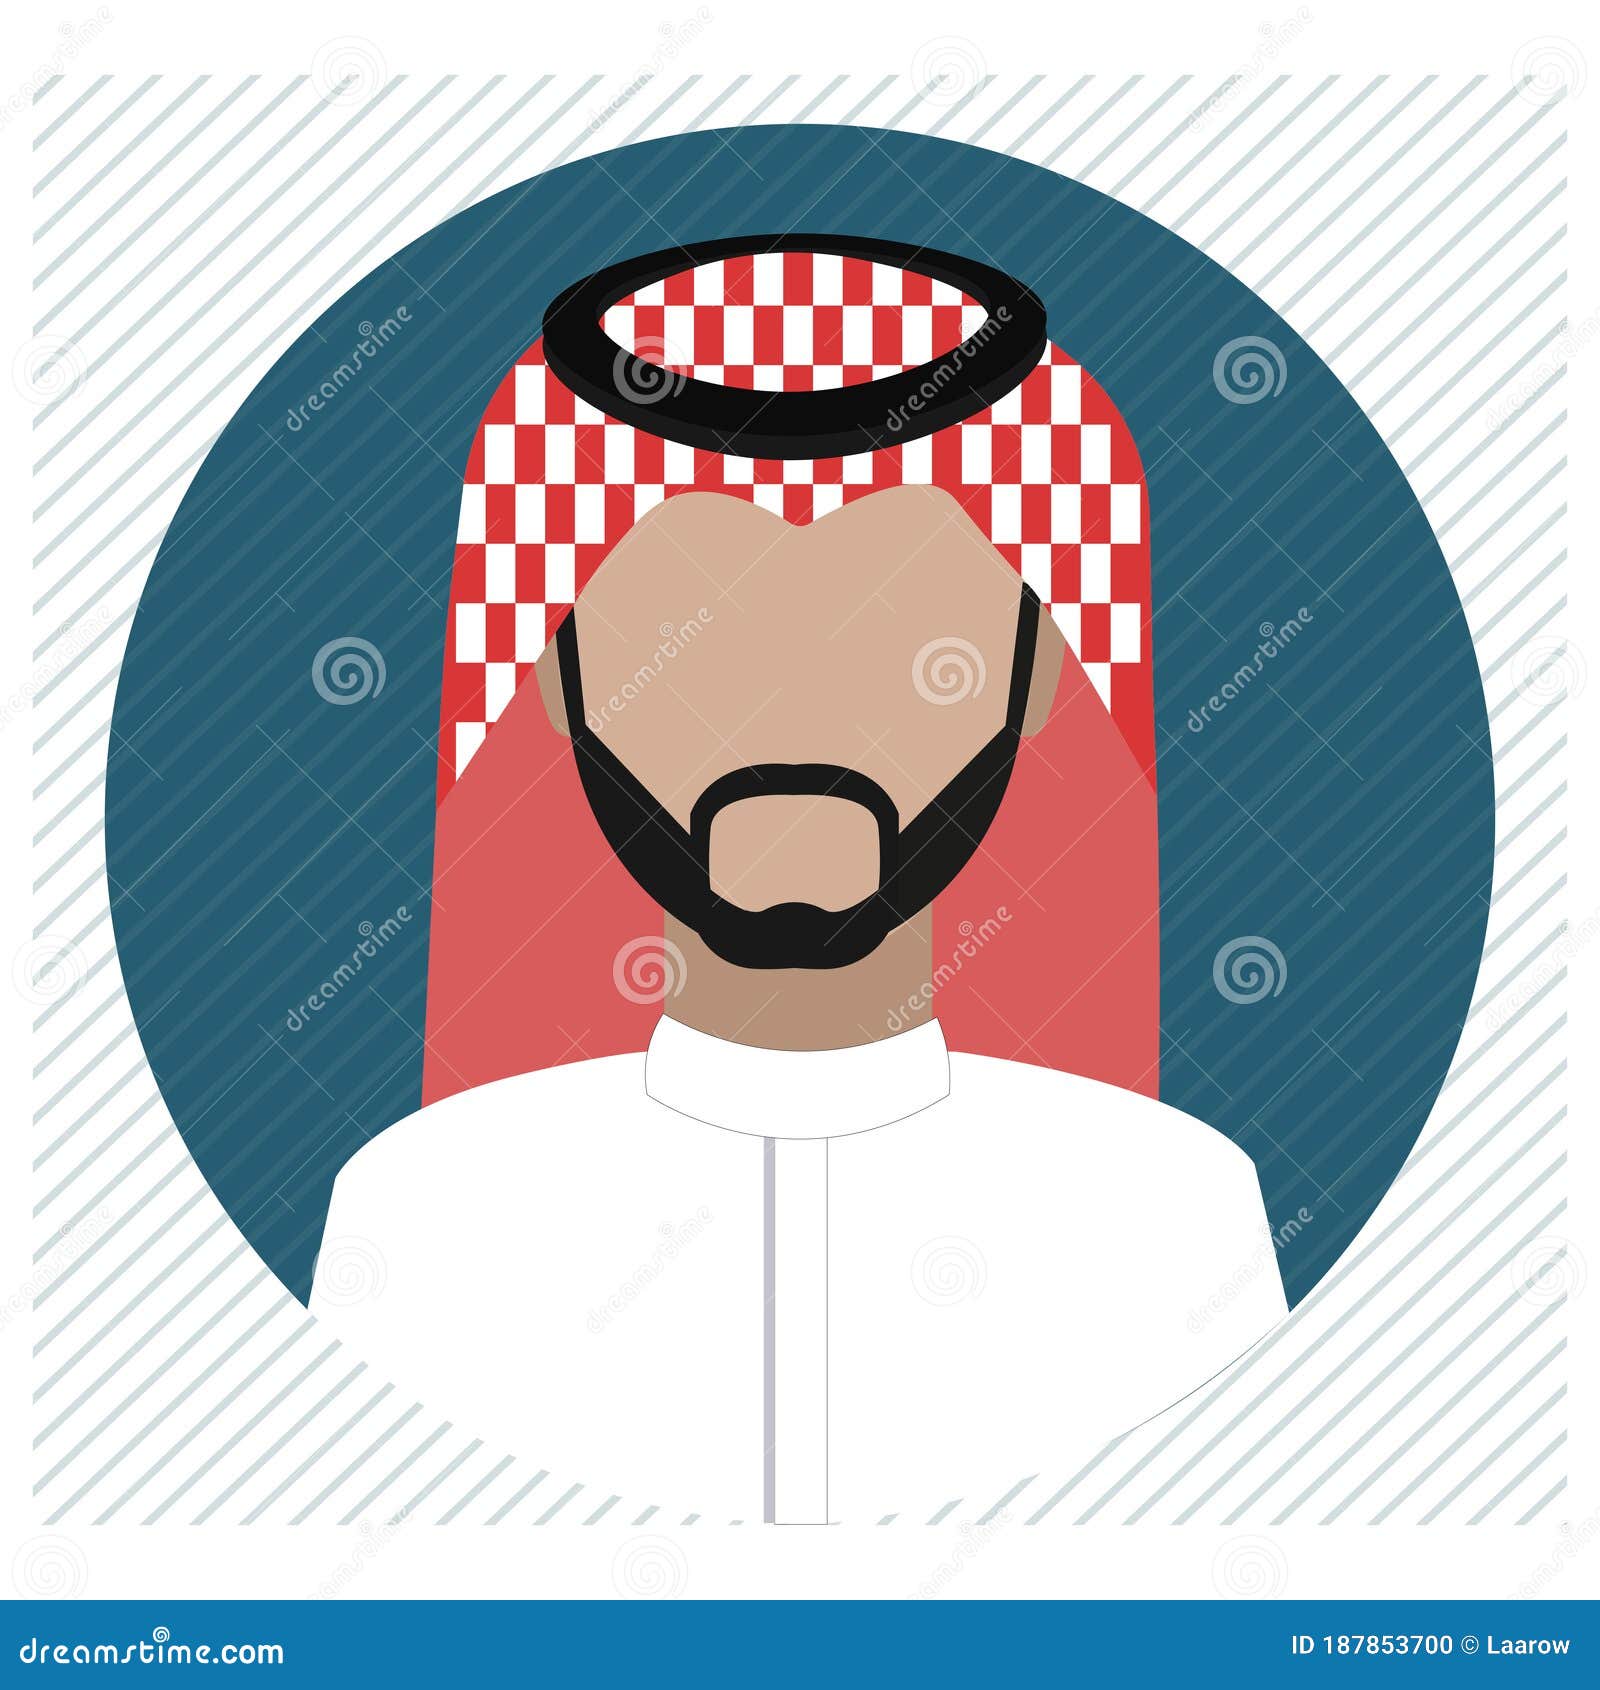 a saudi man icon wearing shemagh and a thobe art & 